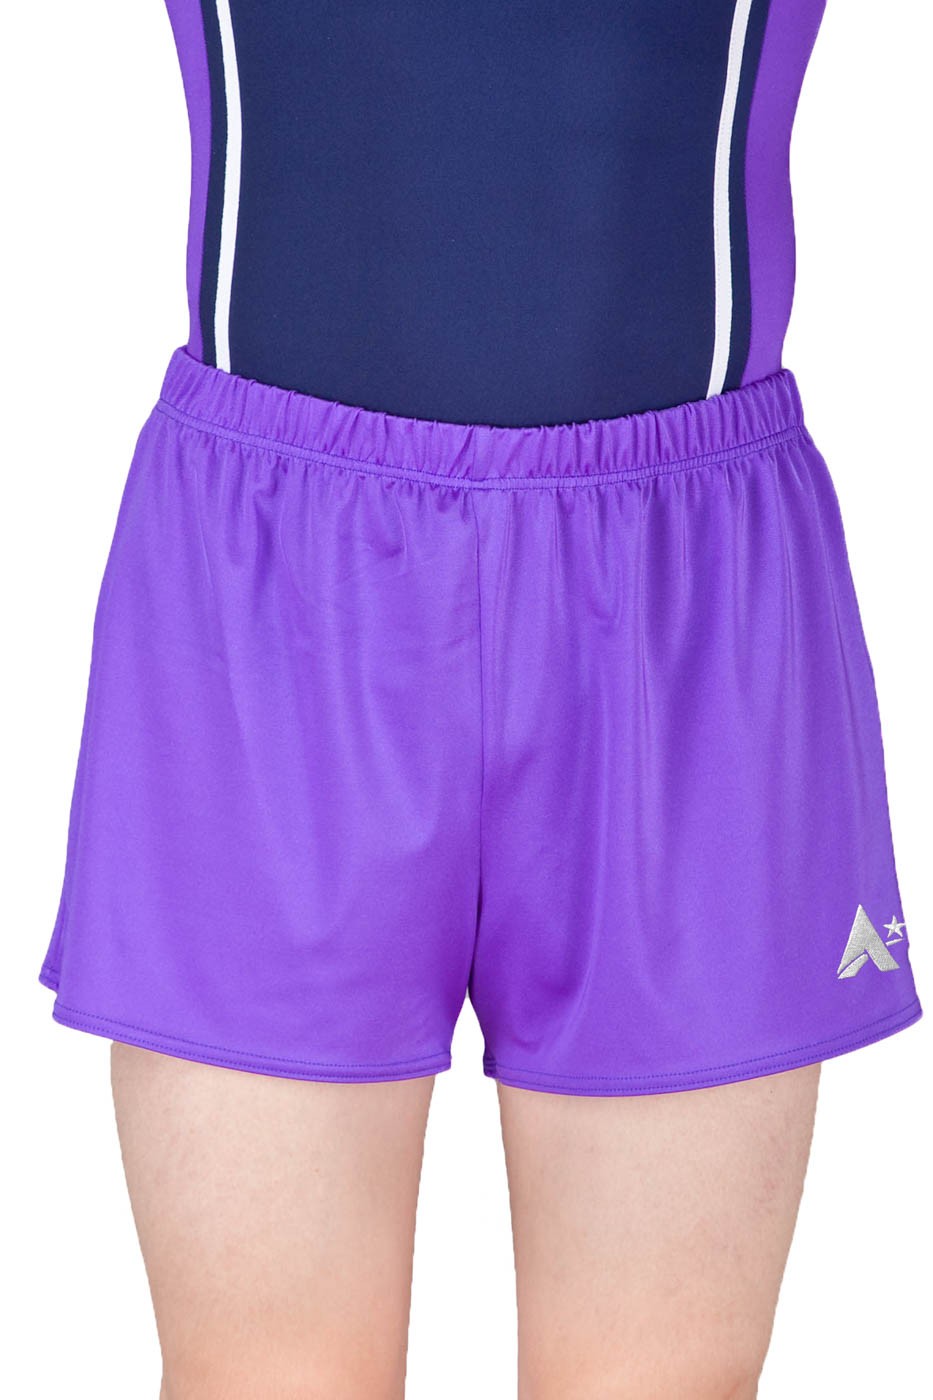 Men's Purple Lycra Shorts - A Star Leotards